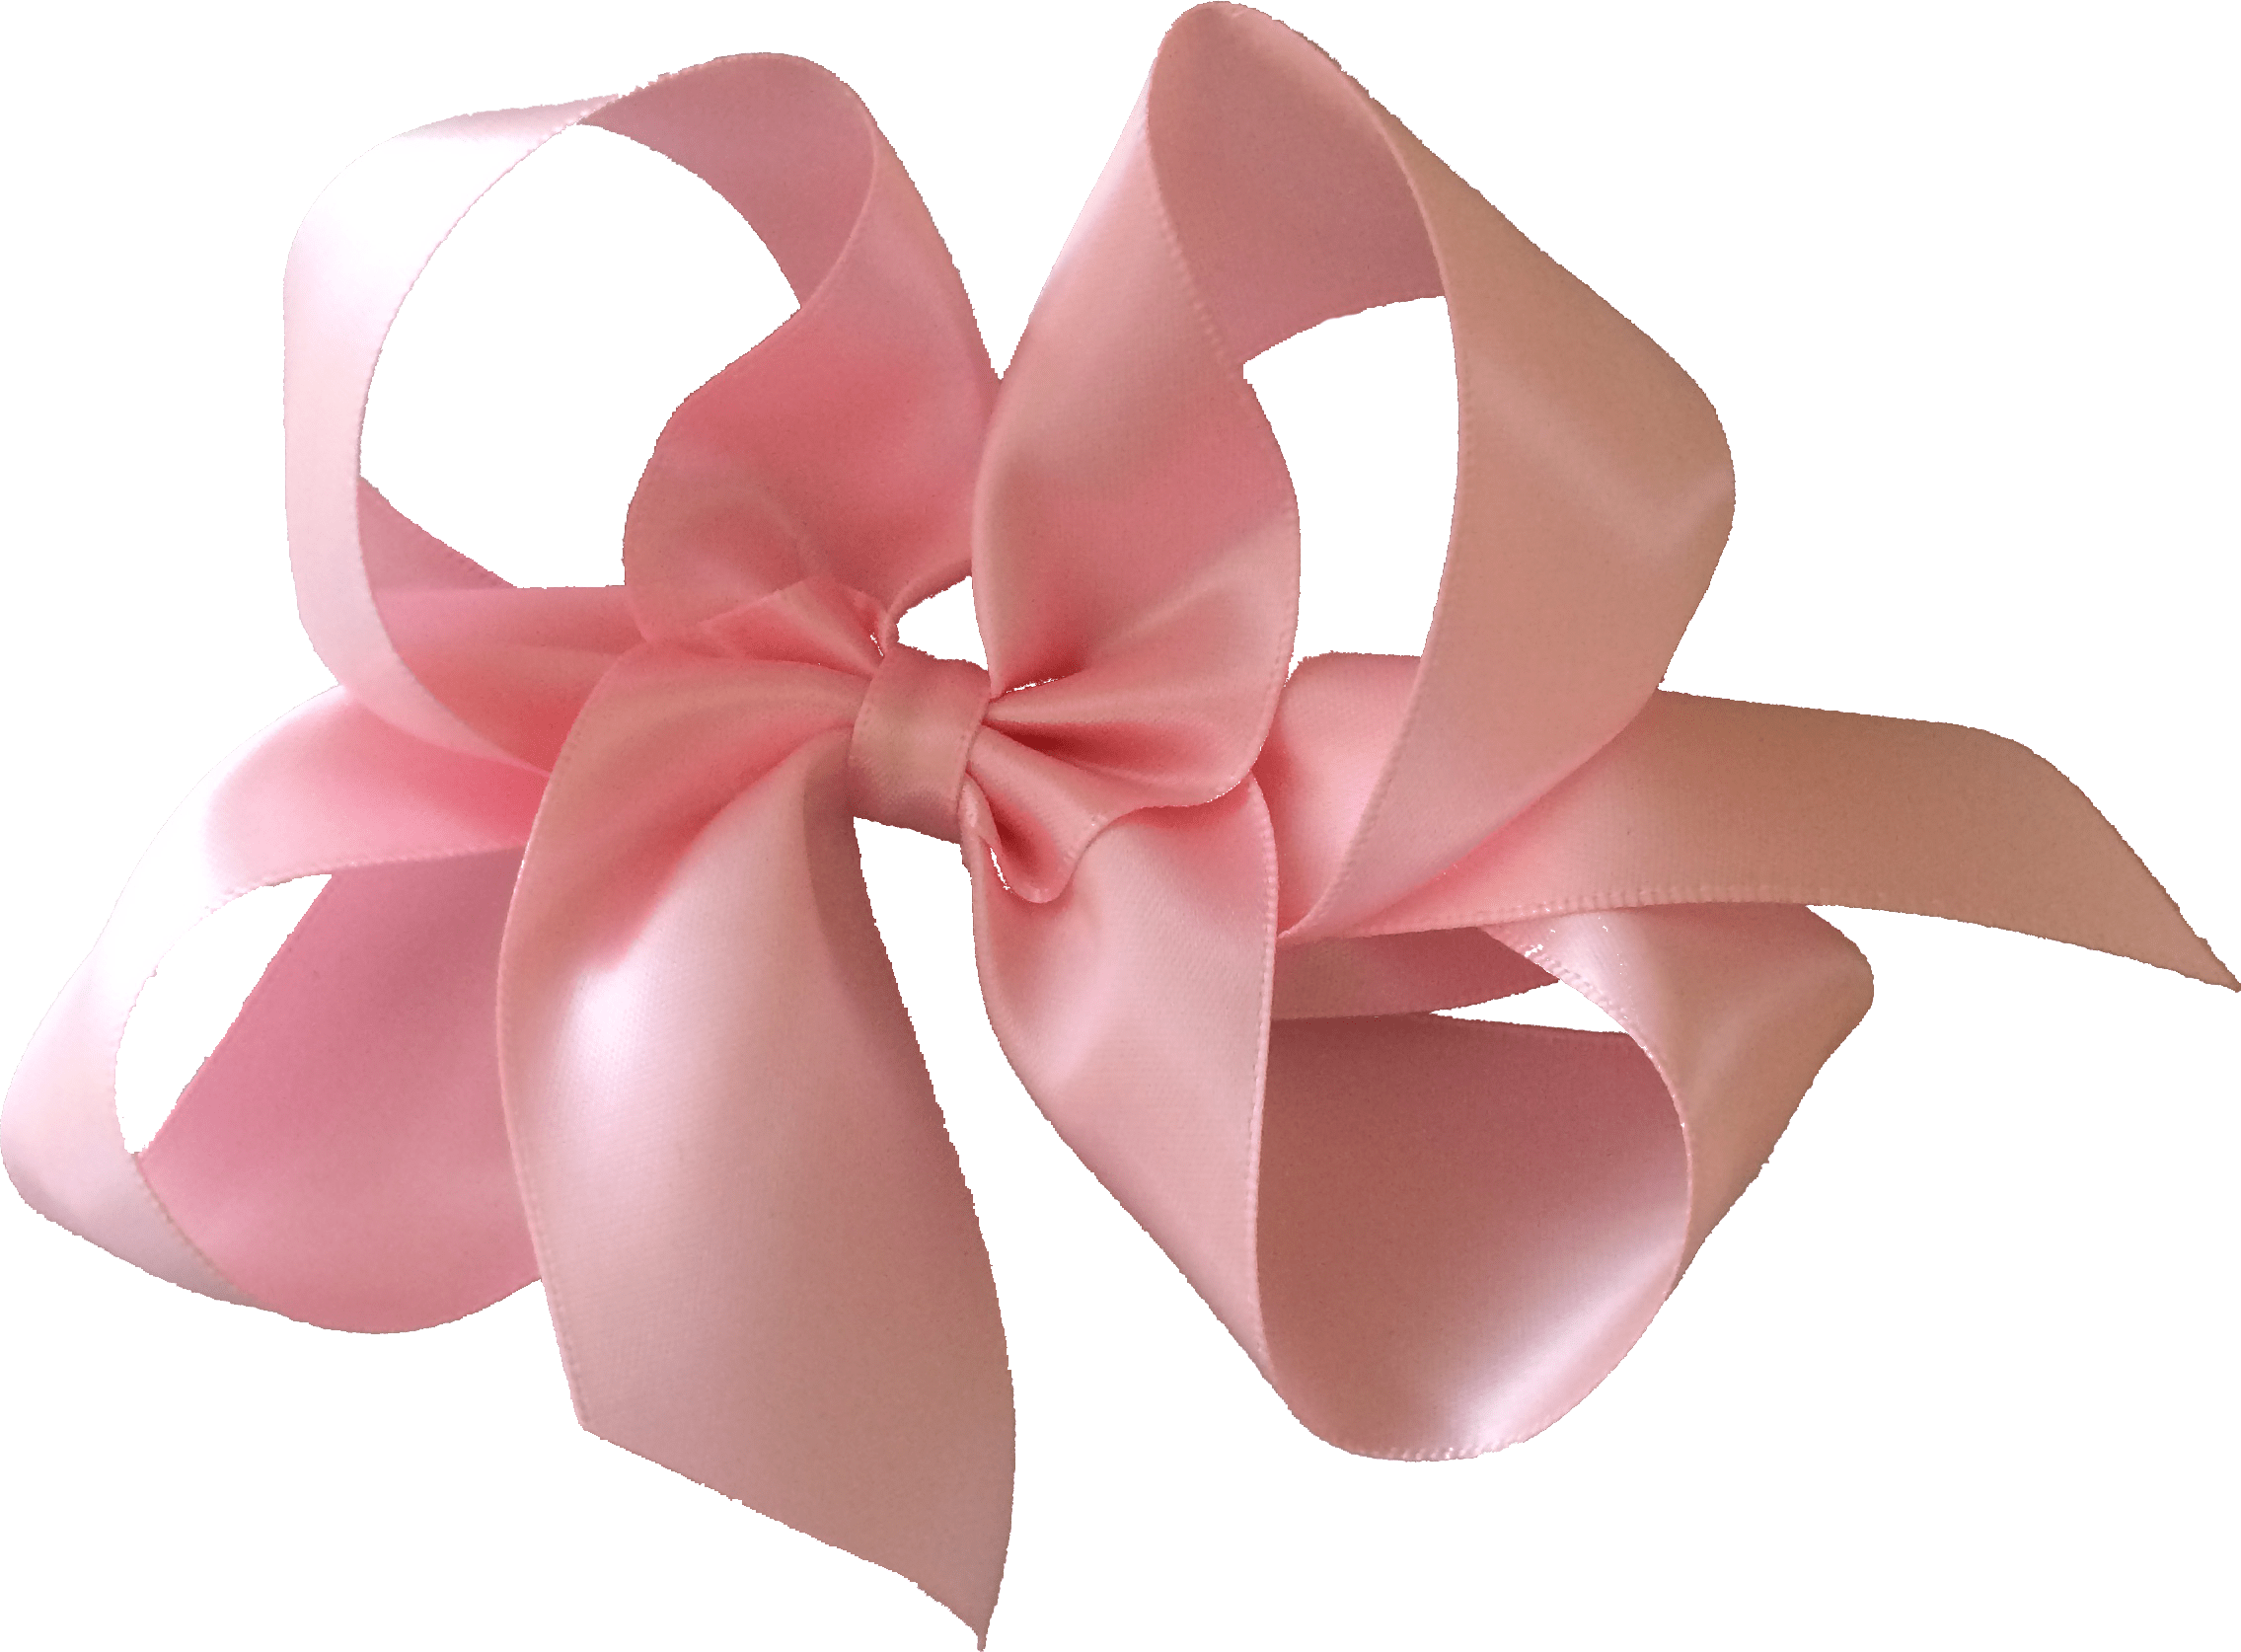 Satin Bow - Baby Pink Sash Clip Large Bow / Alligator Clip